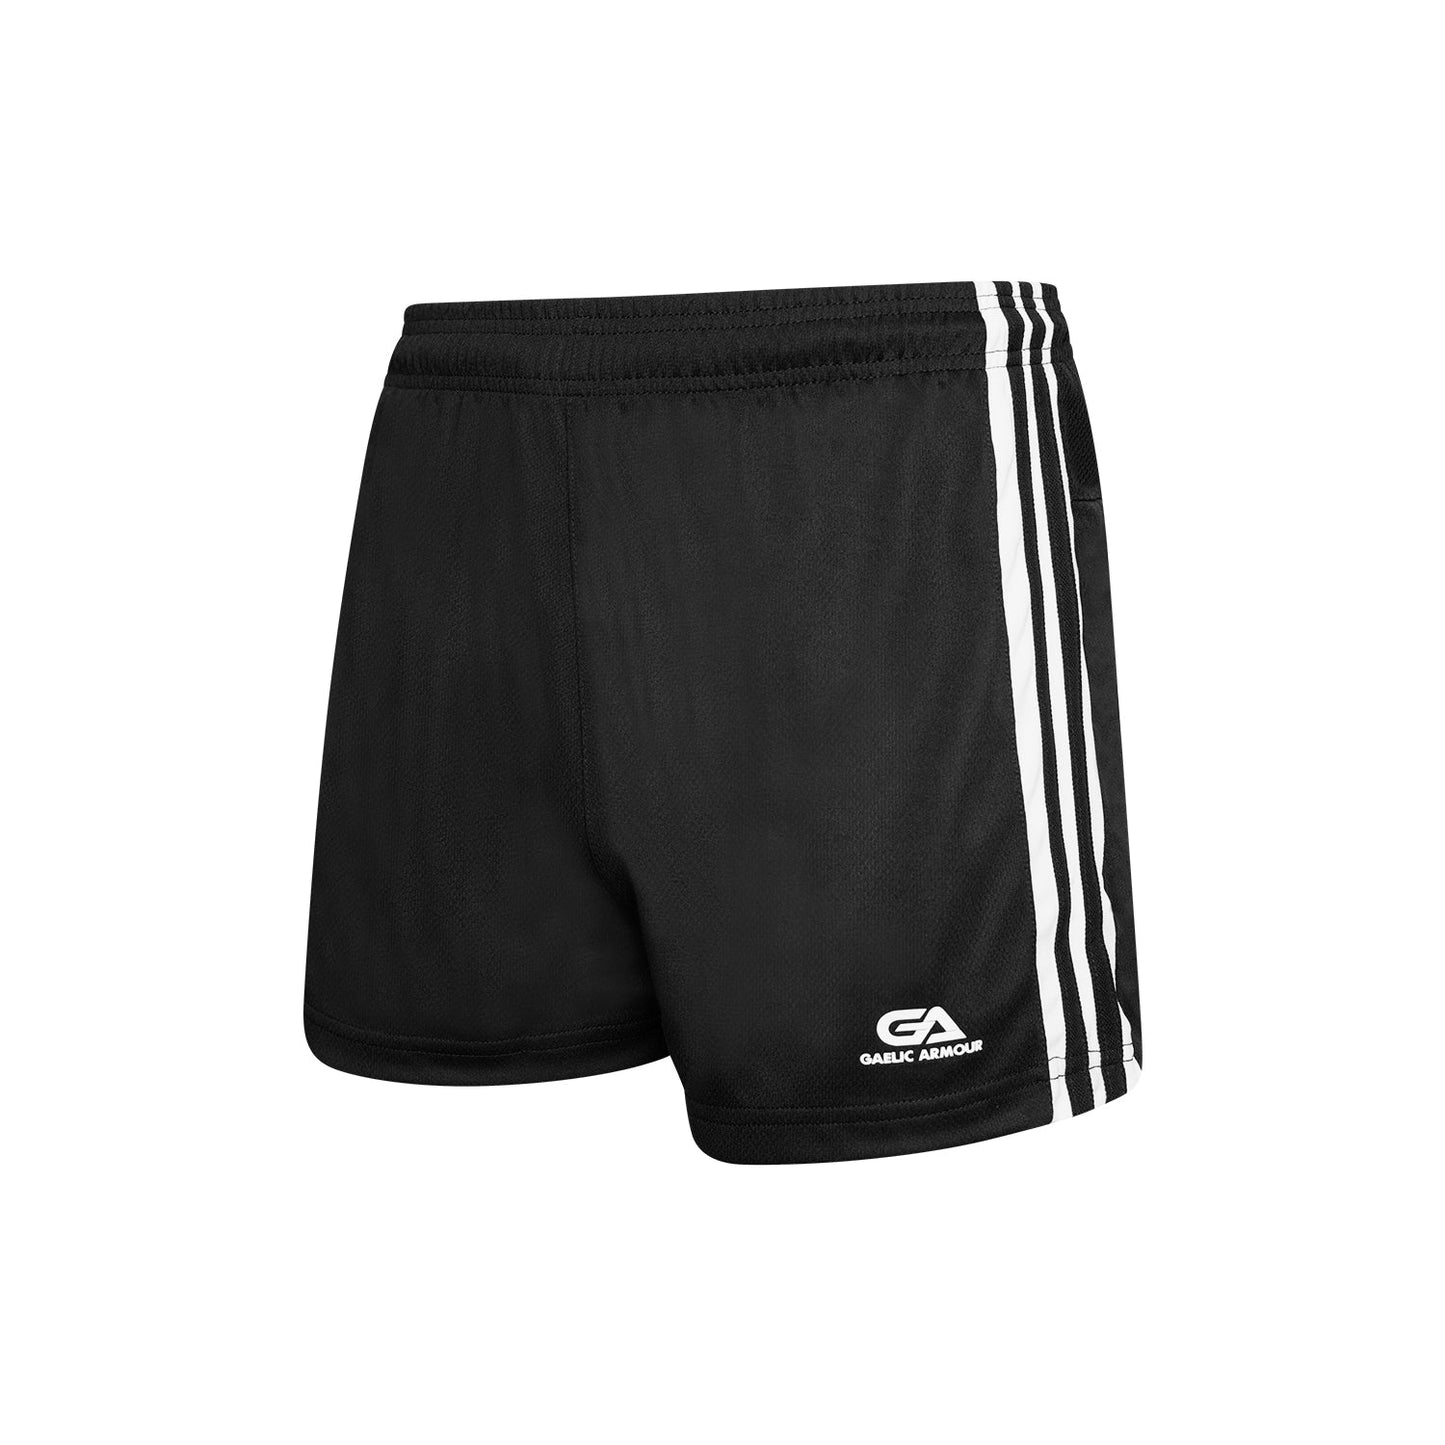 Kids GAA Official Match Shorts Black White